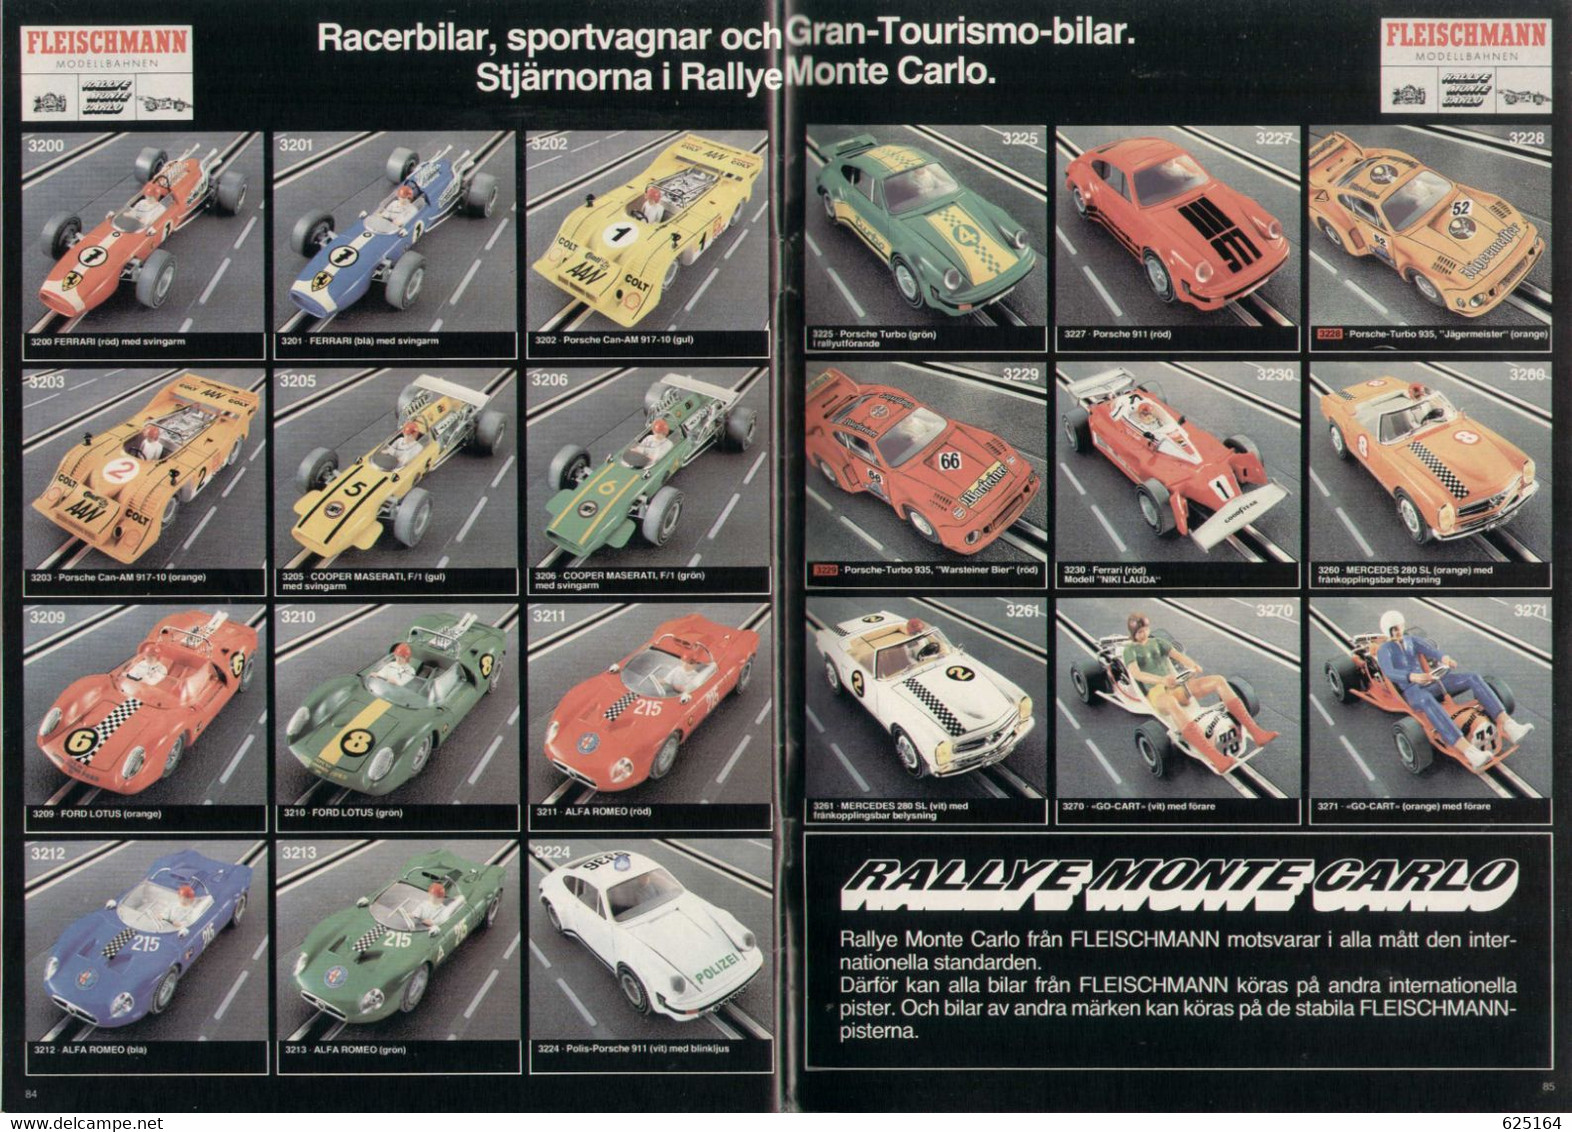 catalogue FLEISCHMANN 1978/79 HO Swedish edition  HO  N  Rally Montecarlo   - en suédois